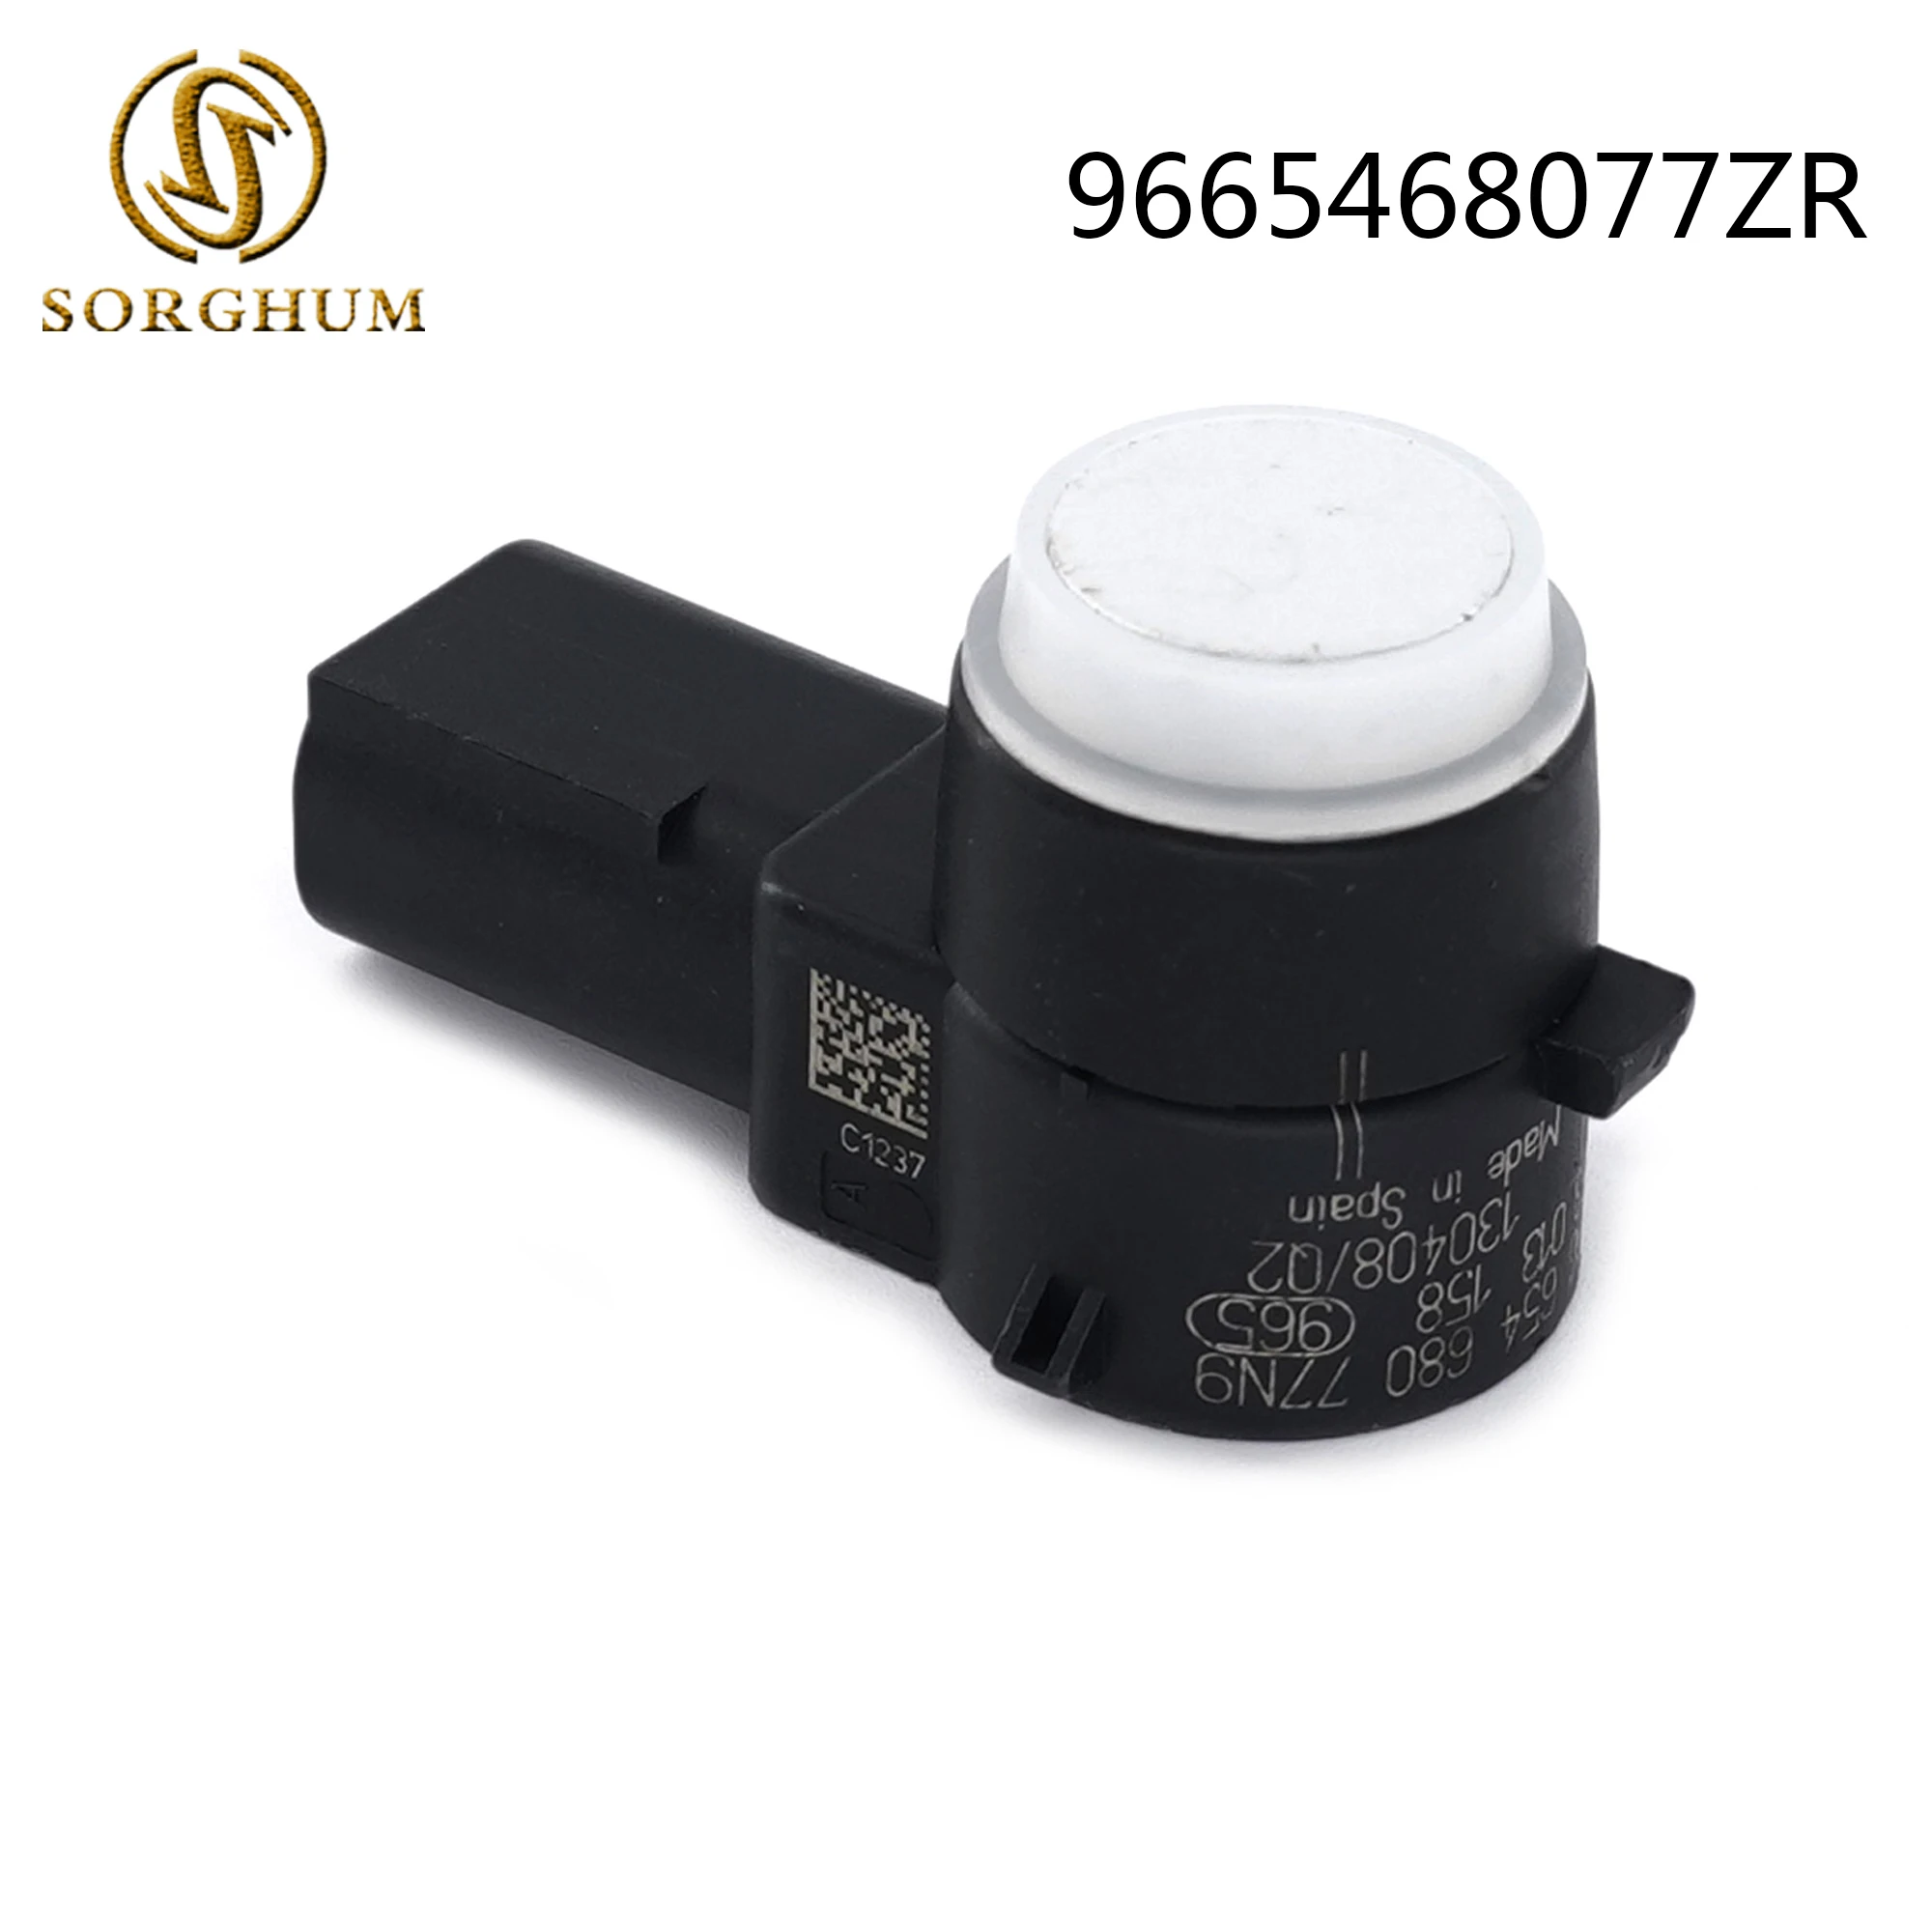 

SORGHUM NEW PDC Ultrasonic Parking Distance Detector Sensor For Citroen Peugeot Bumper Reverse Assist PSA9665468077ZR 0263013133